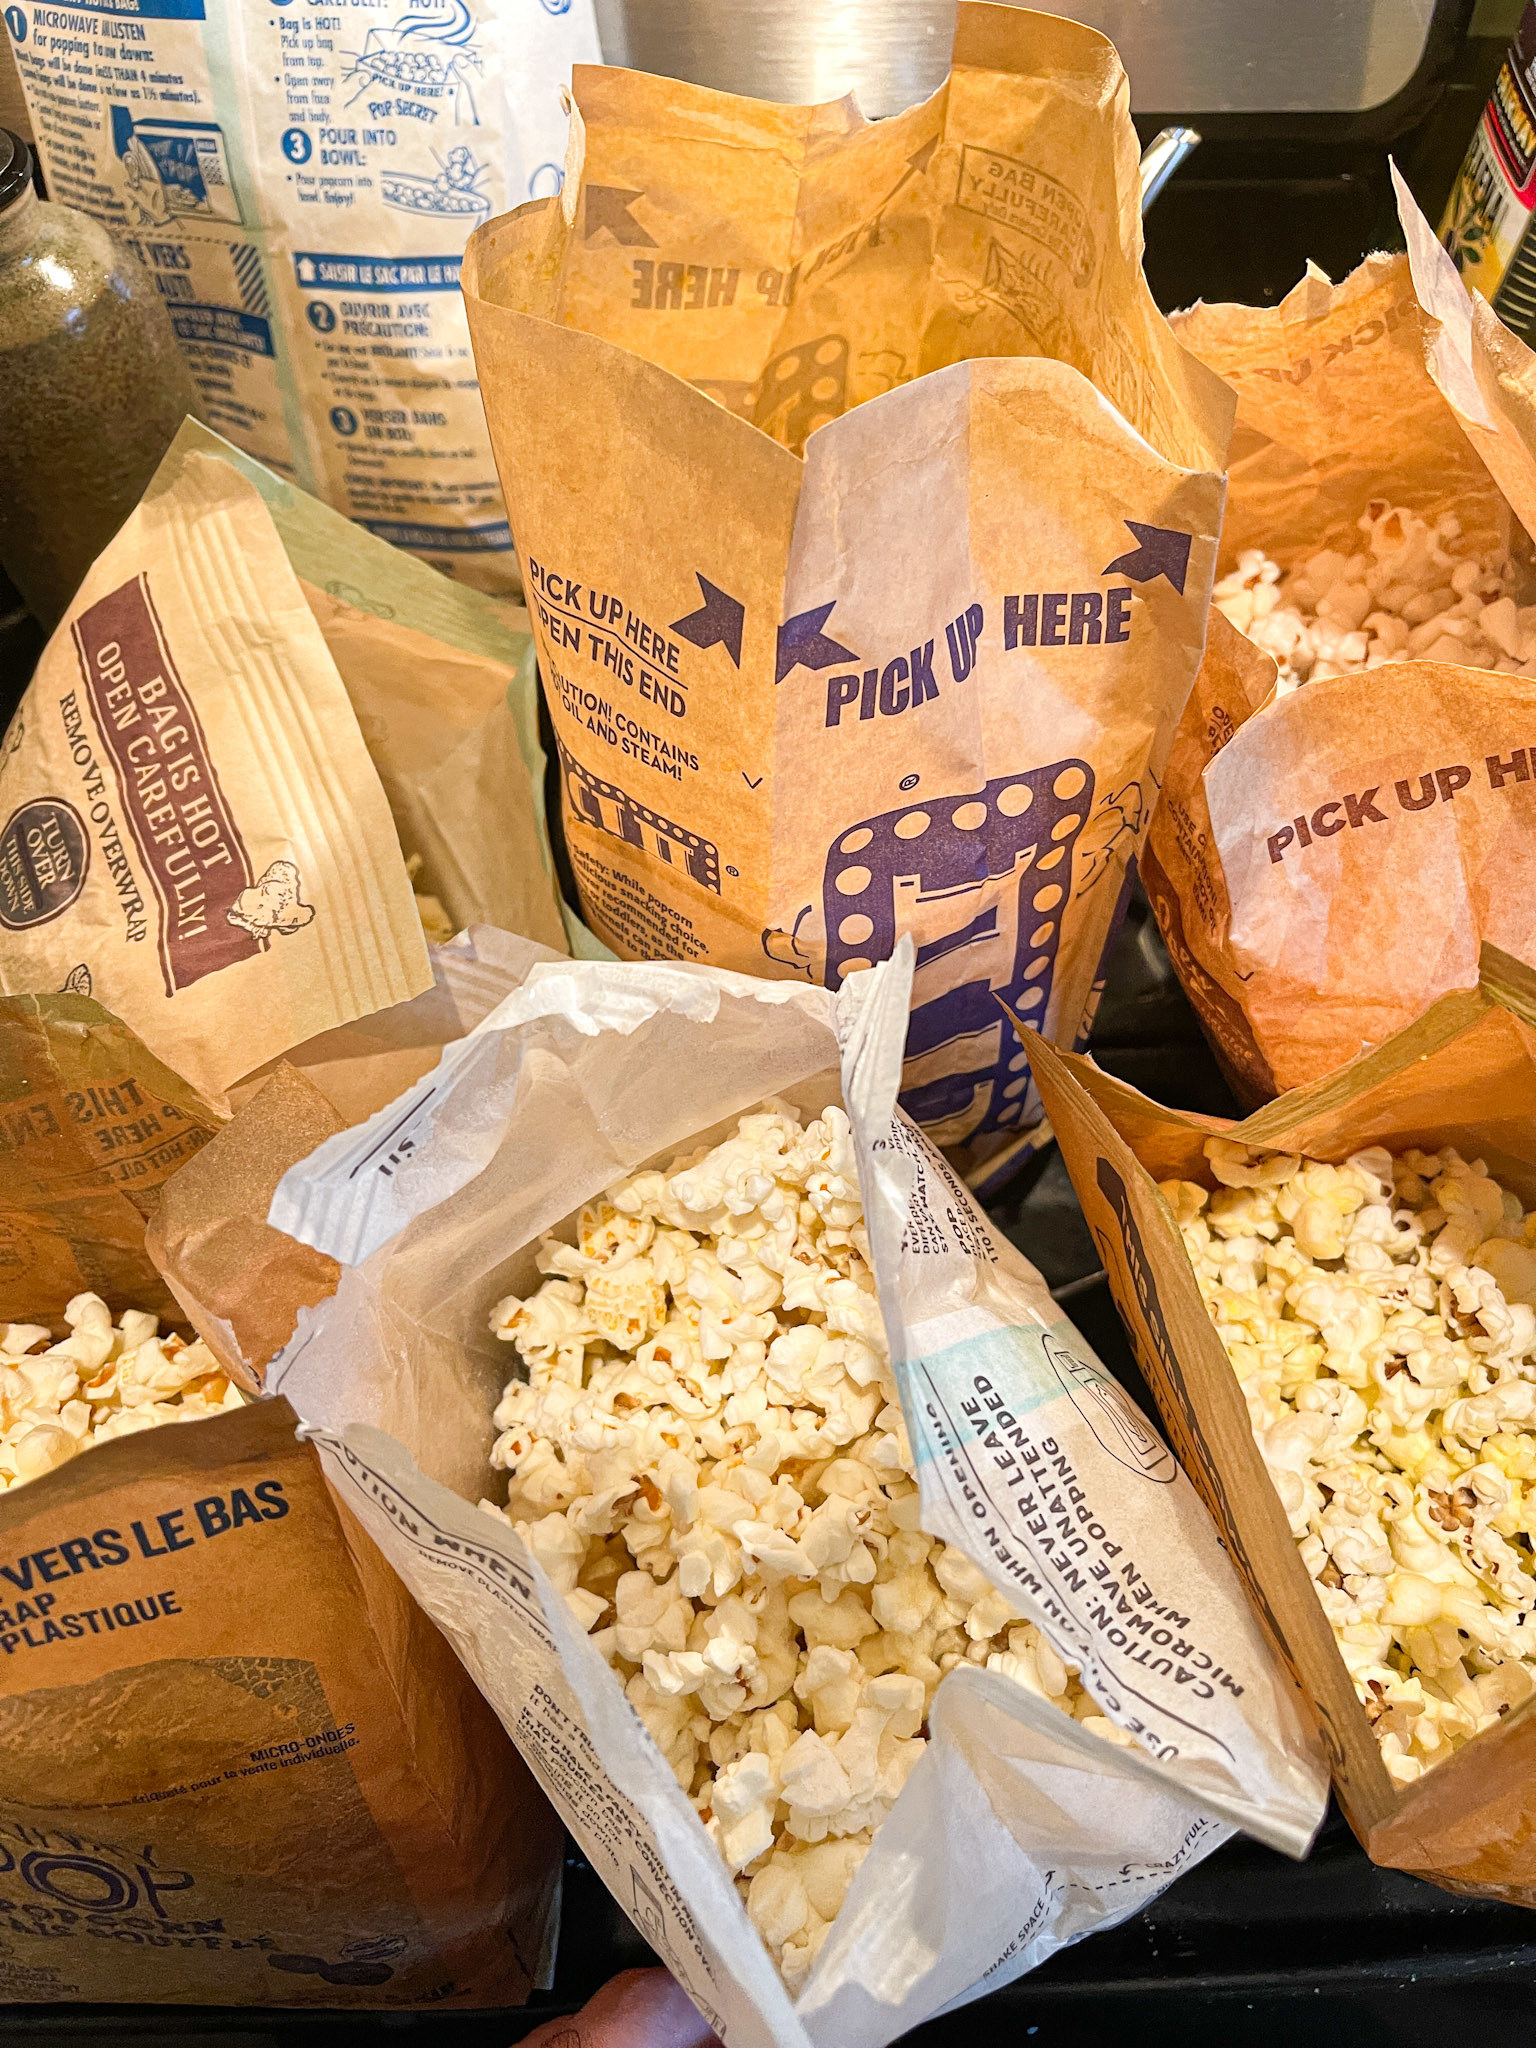 Homemade Microwave Popcorn (How to Make Popcorn)